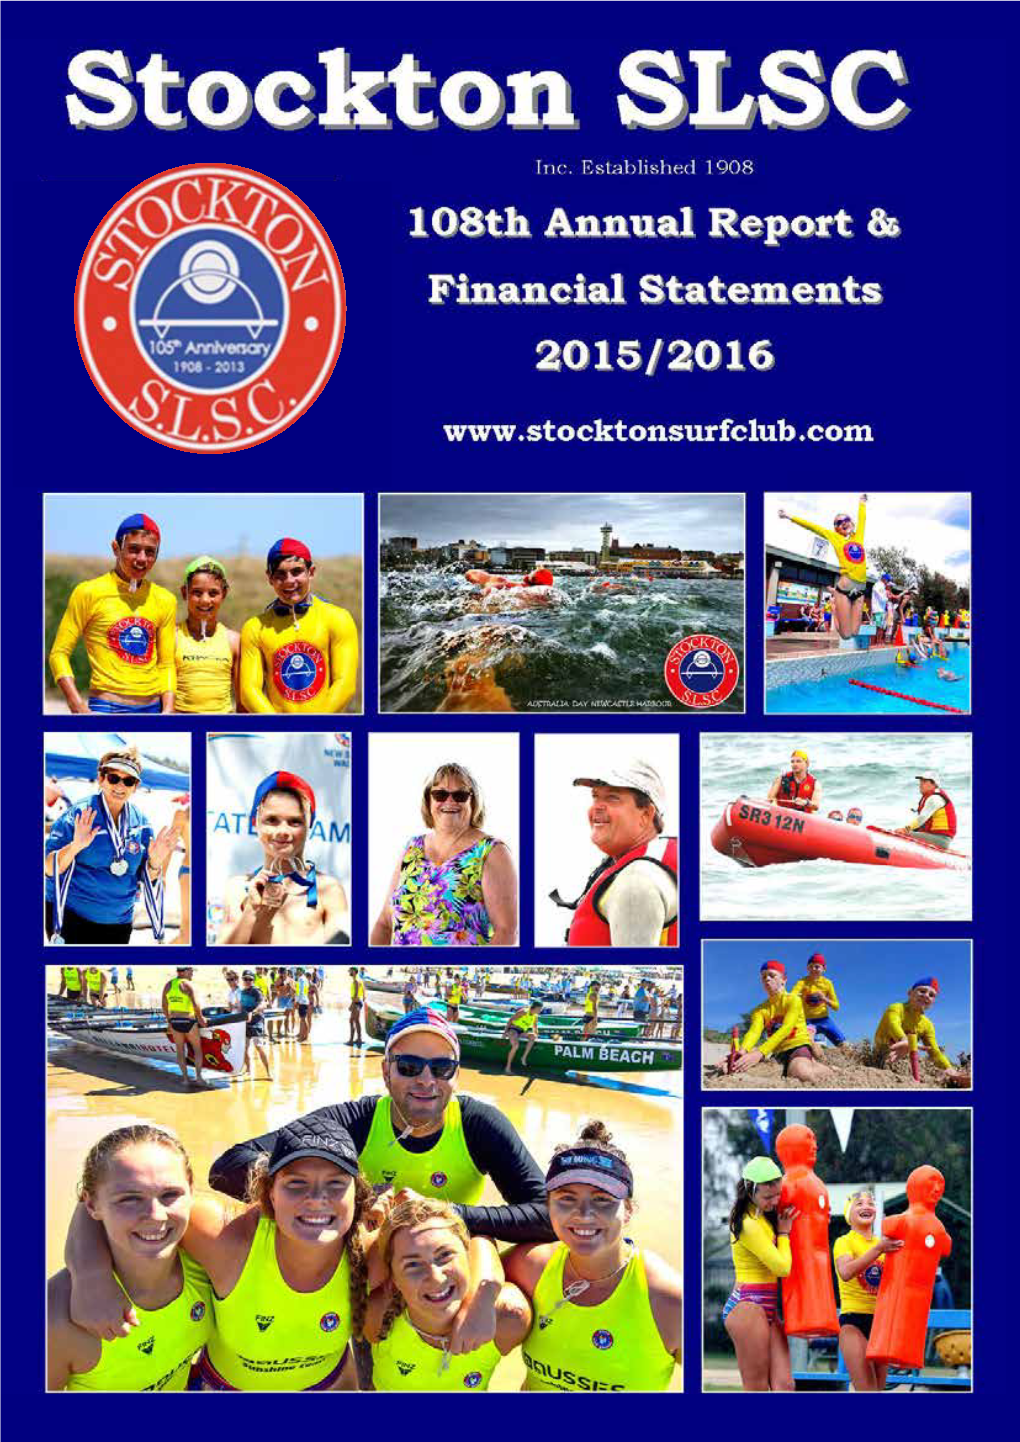 2015/16 Annual Report